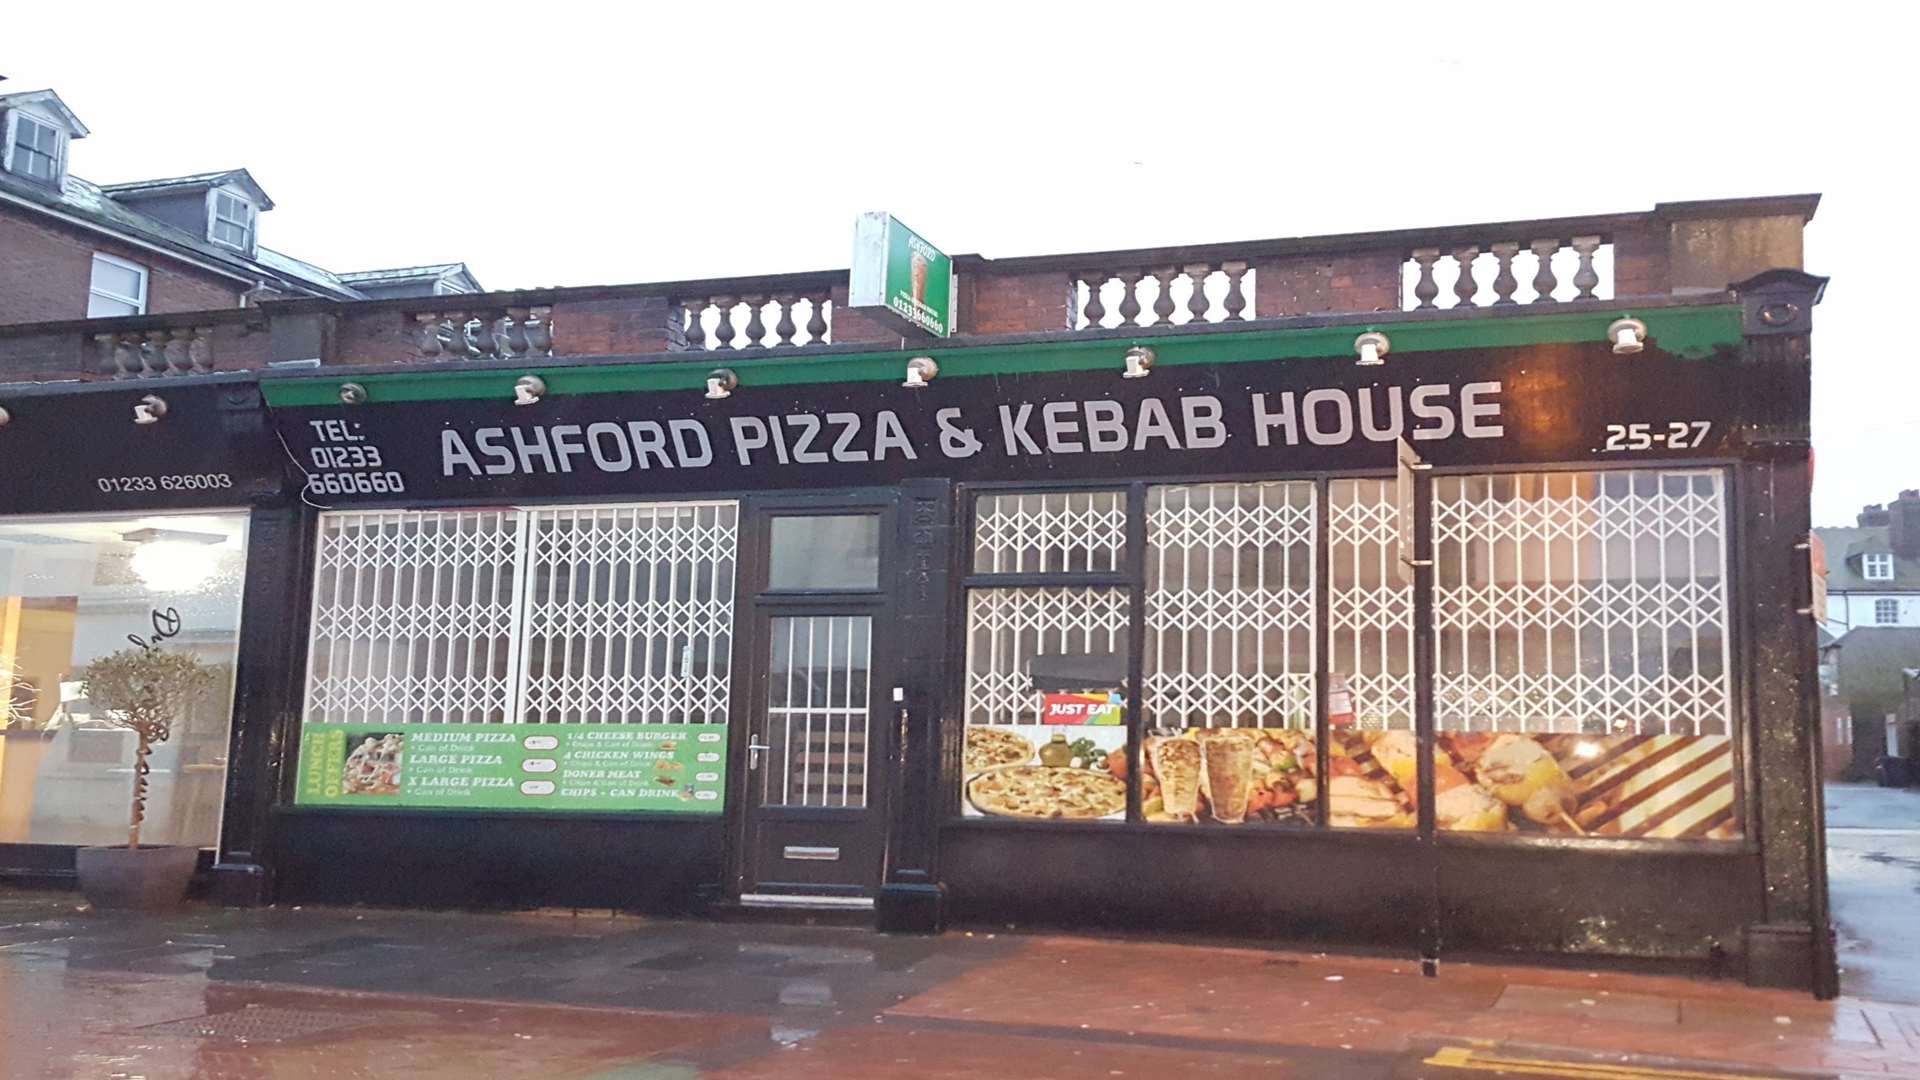 The Ashford Pizza and Kebab House